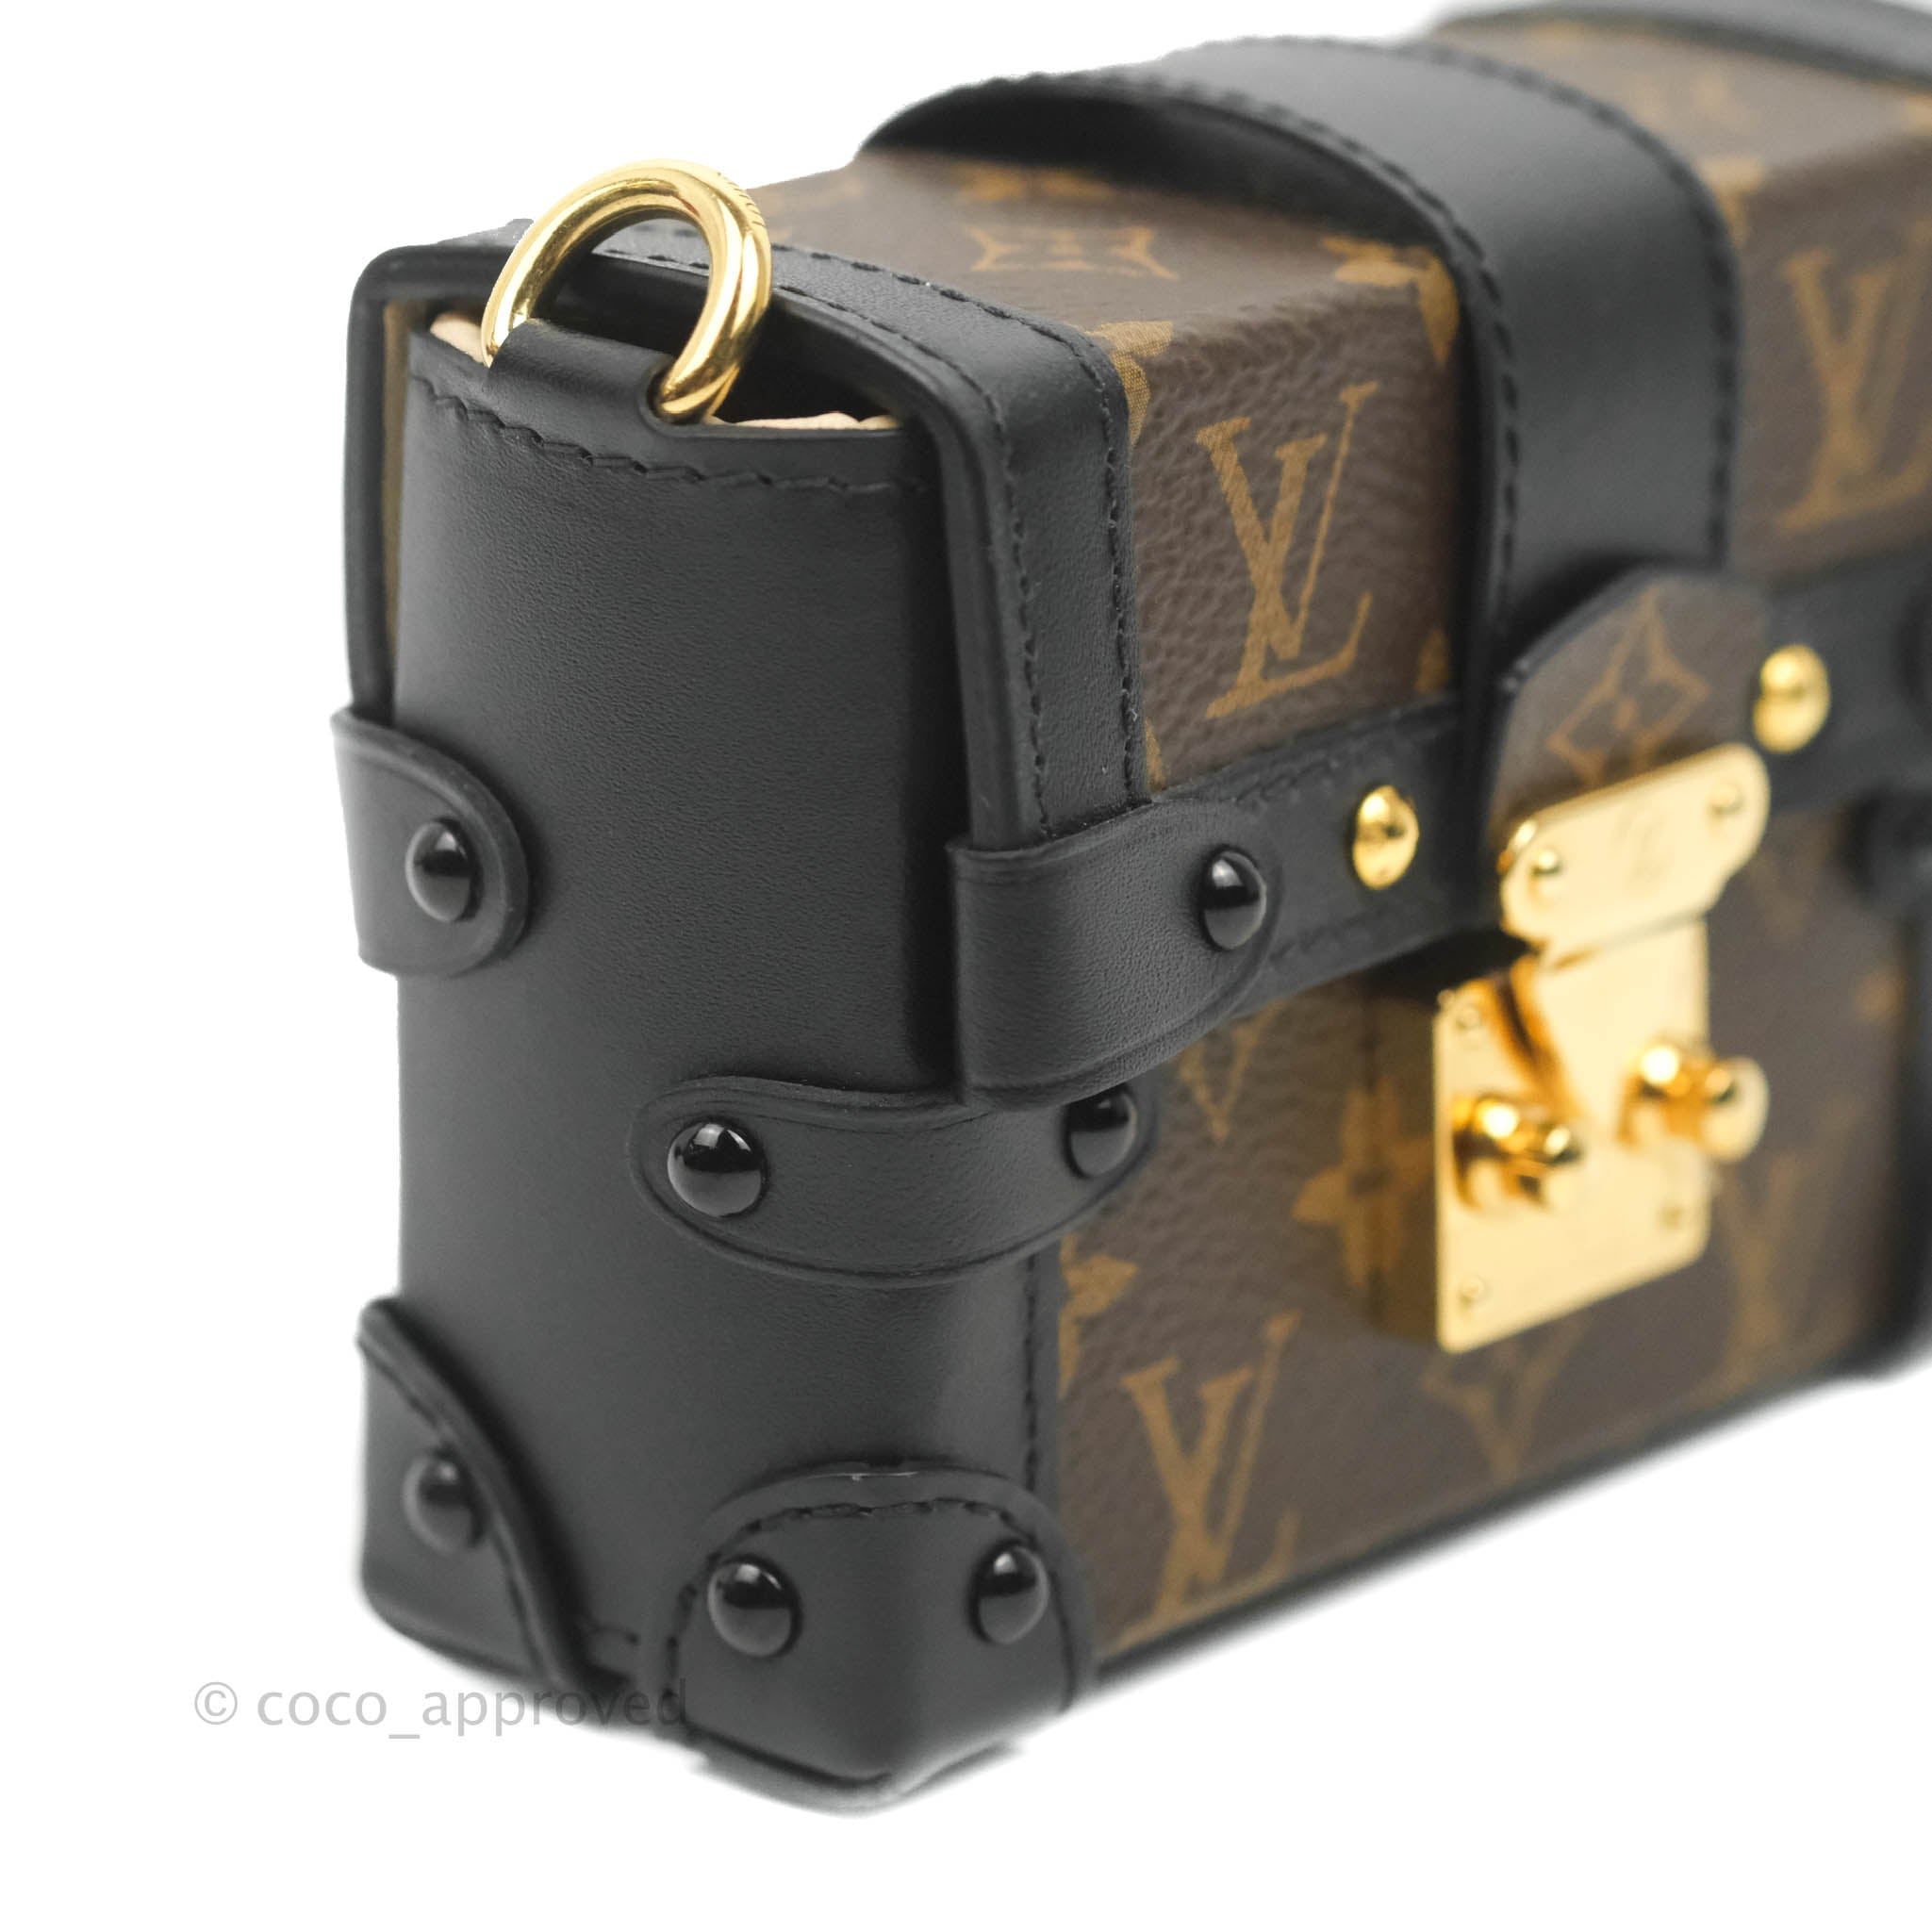 Louis Vuitton, Bags, Louis Vuitton Mini Essential Trunk